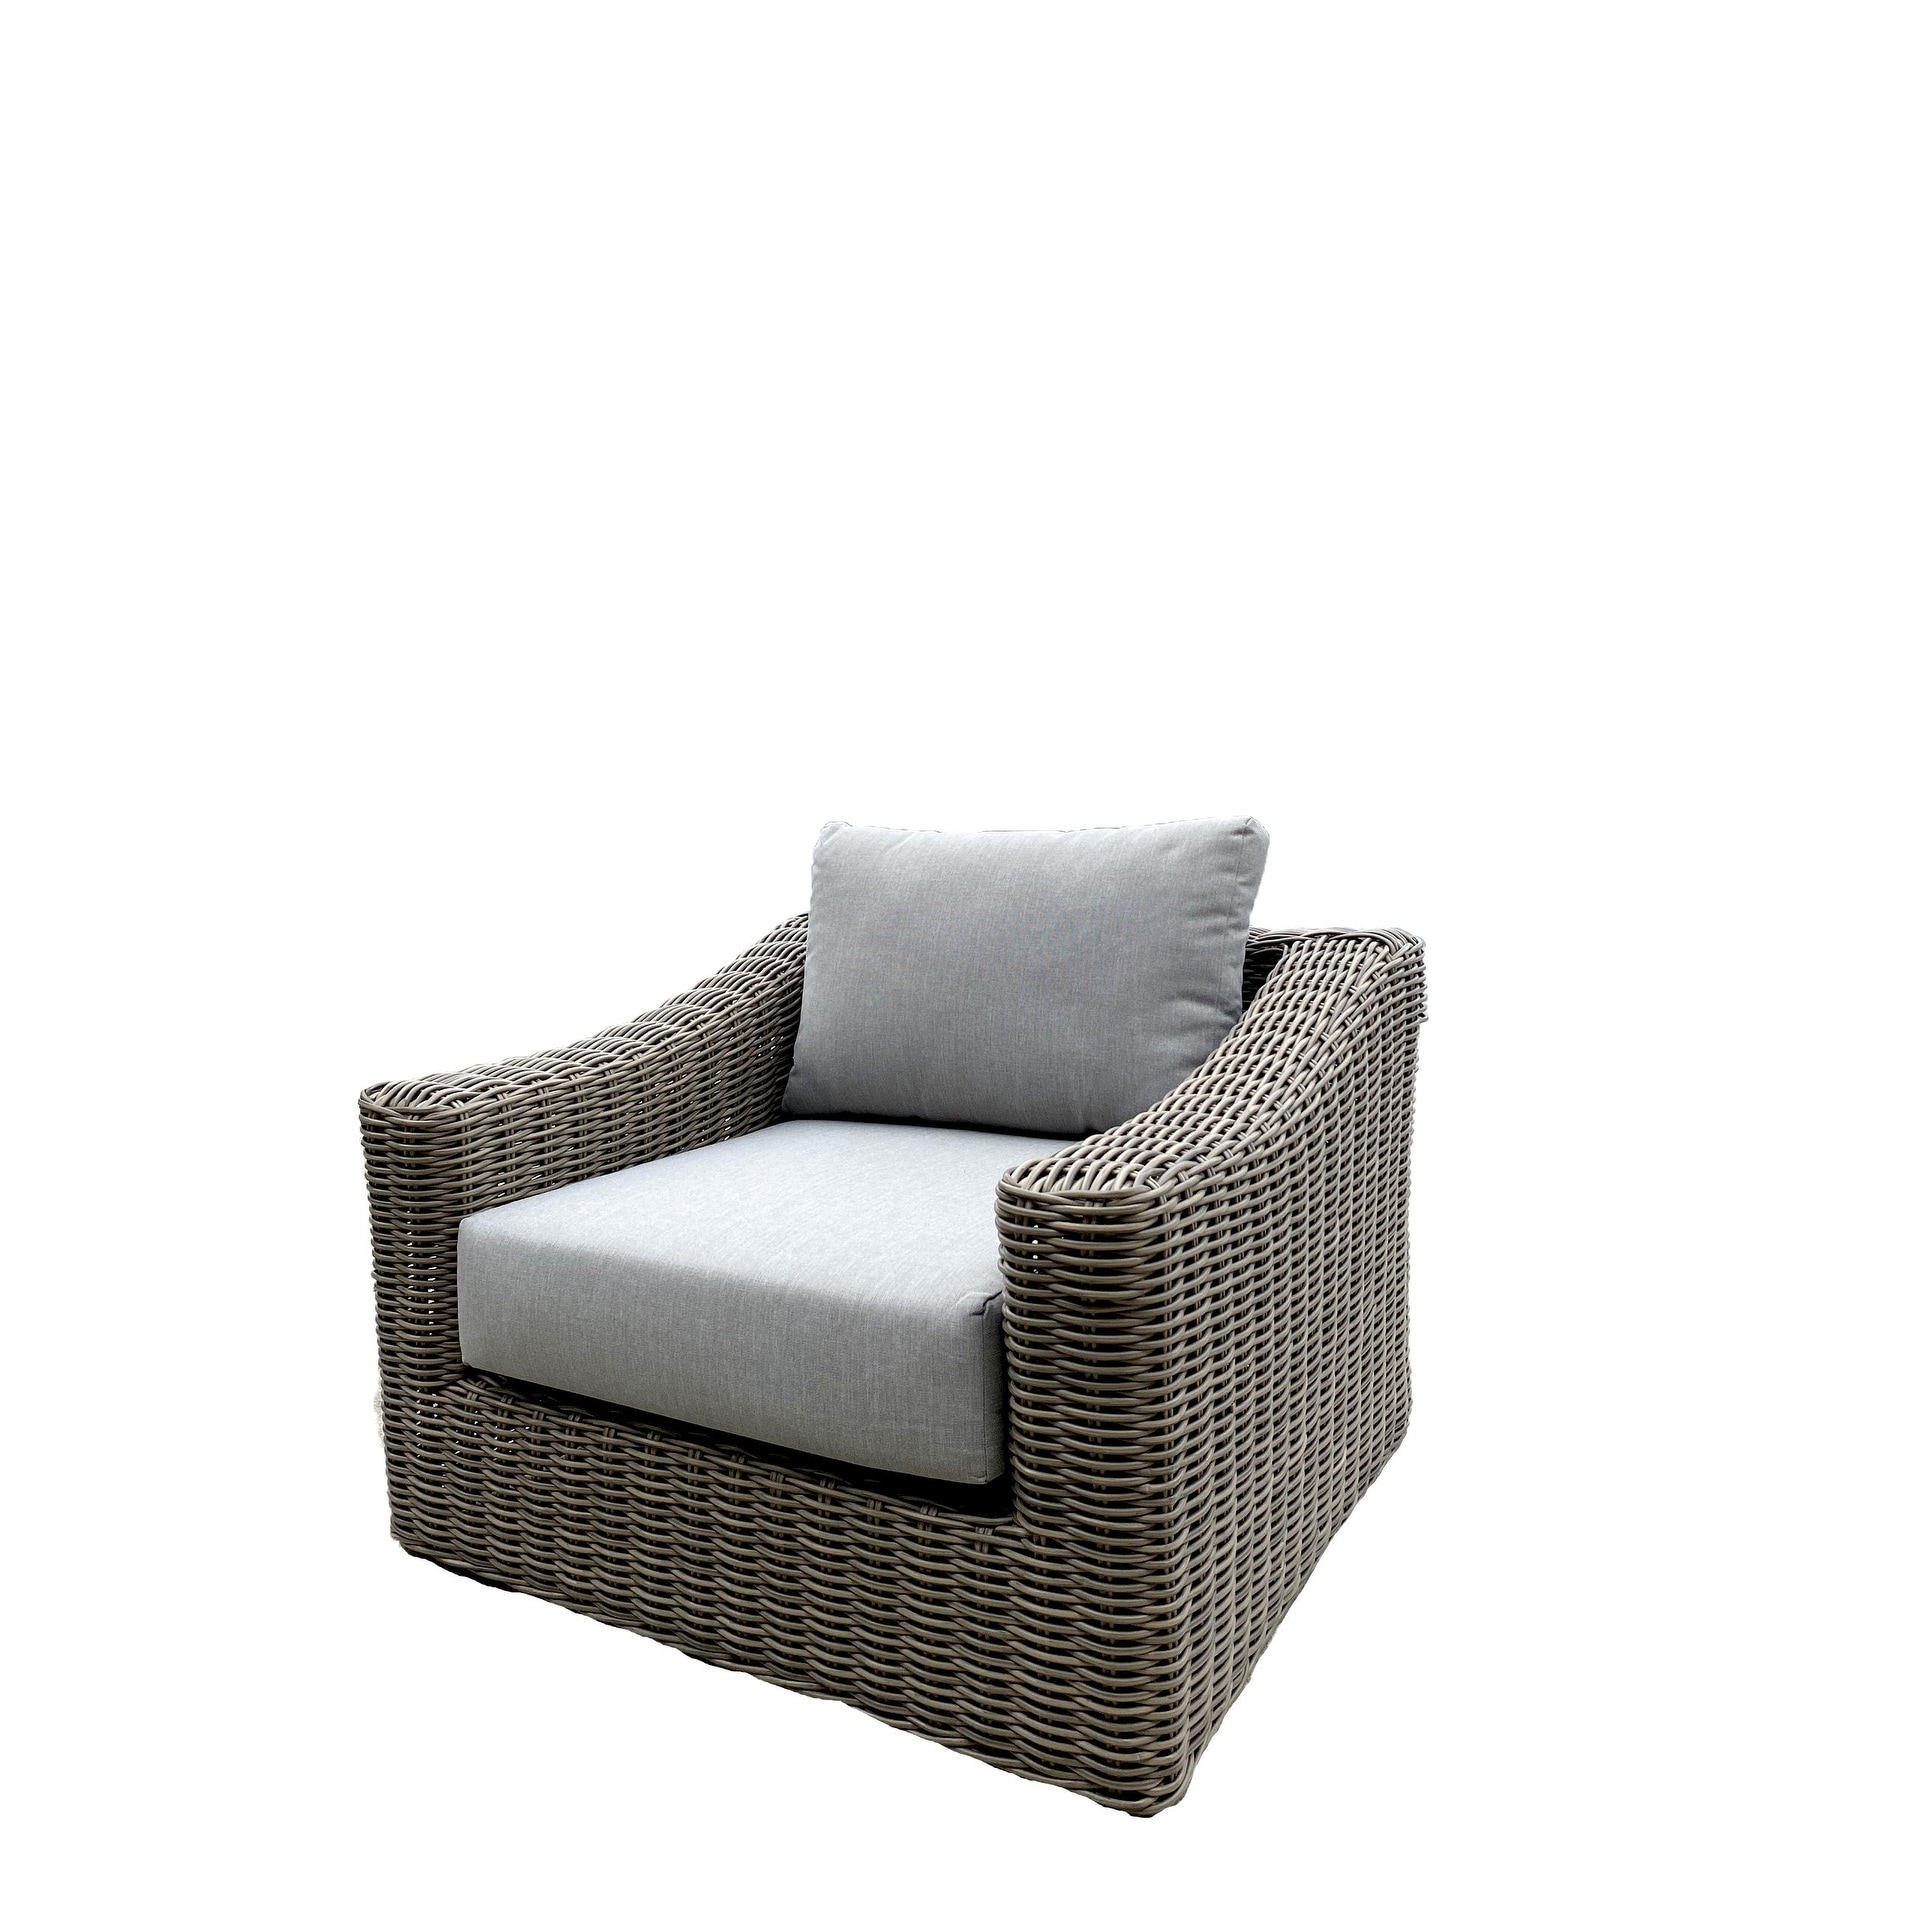 Tulum Two-tone Dark Beige Aluminum Frame Arm Chair In Silver Cushions